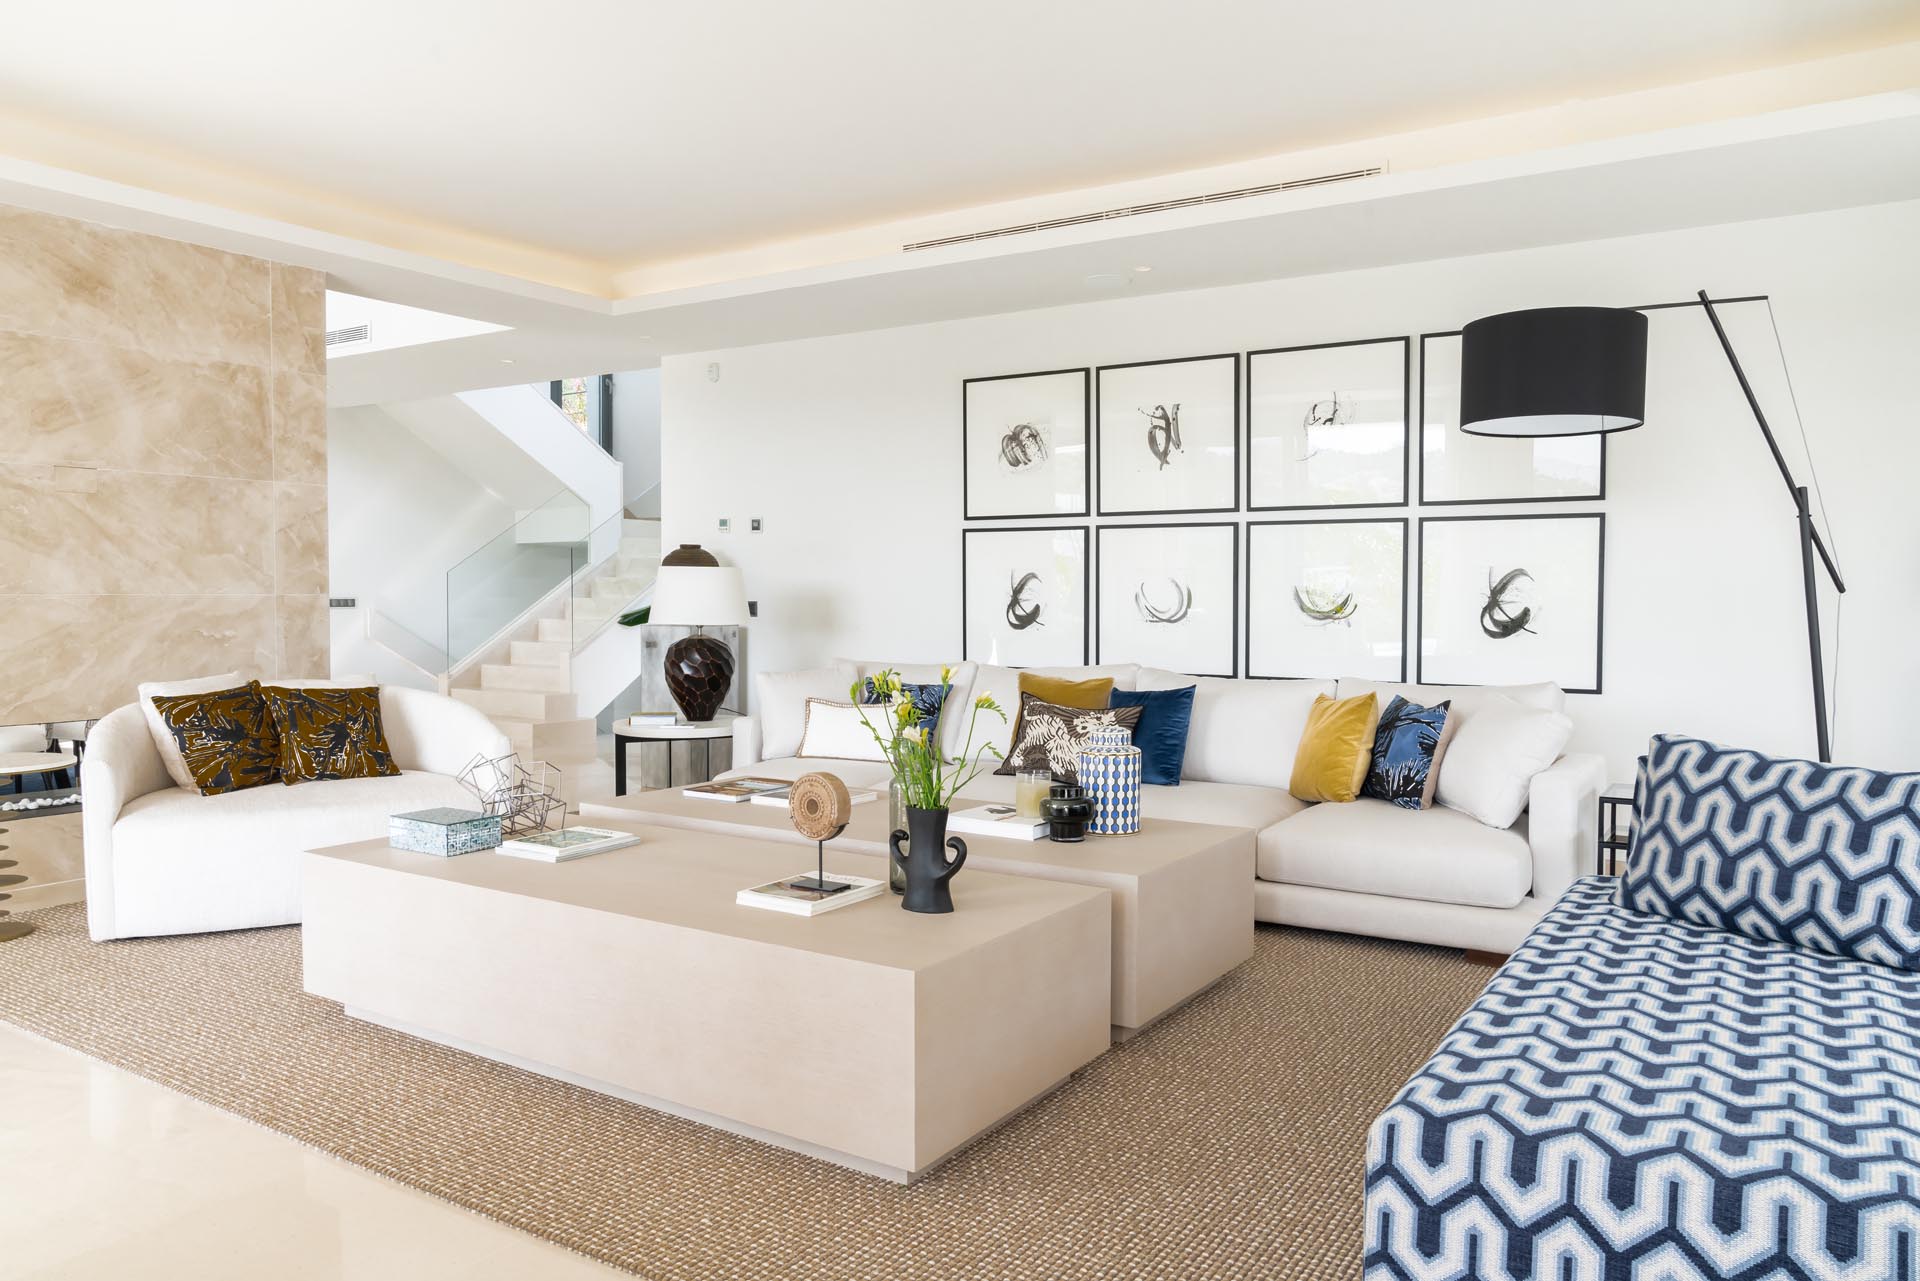 mediterranean style interior design living room